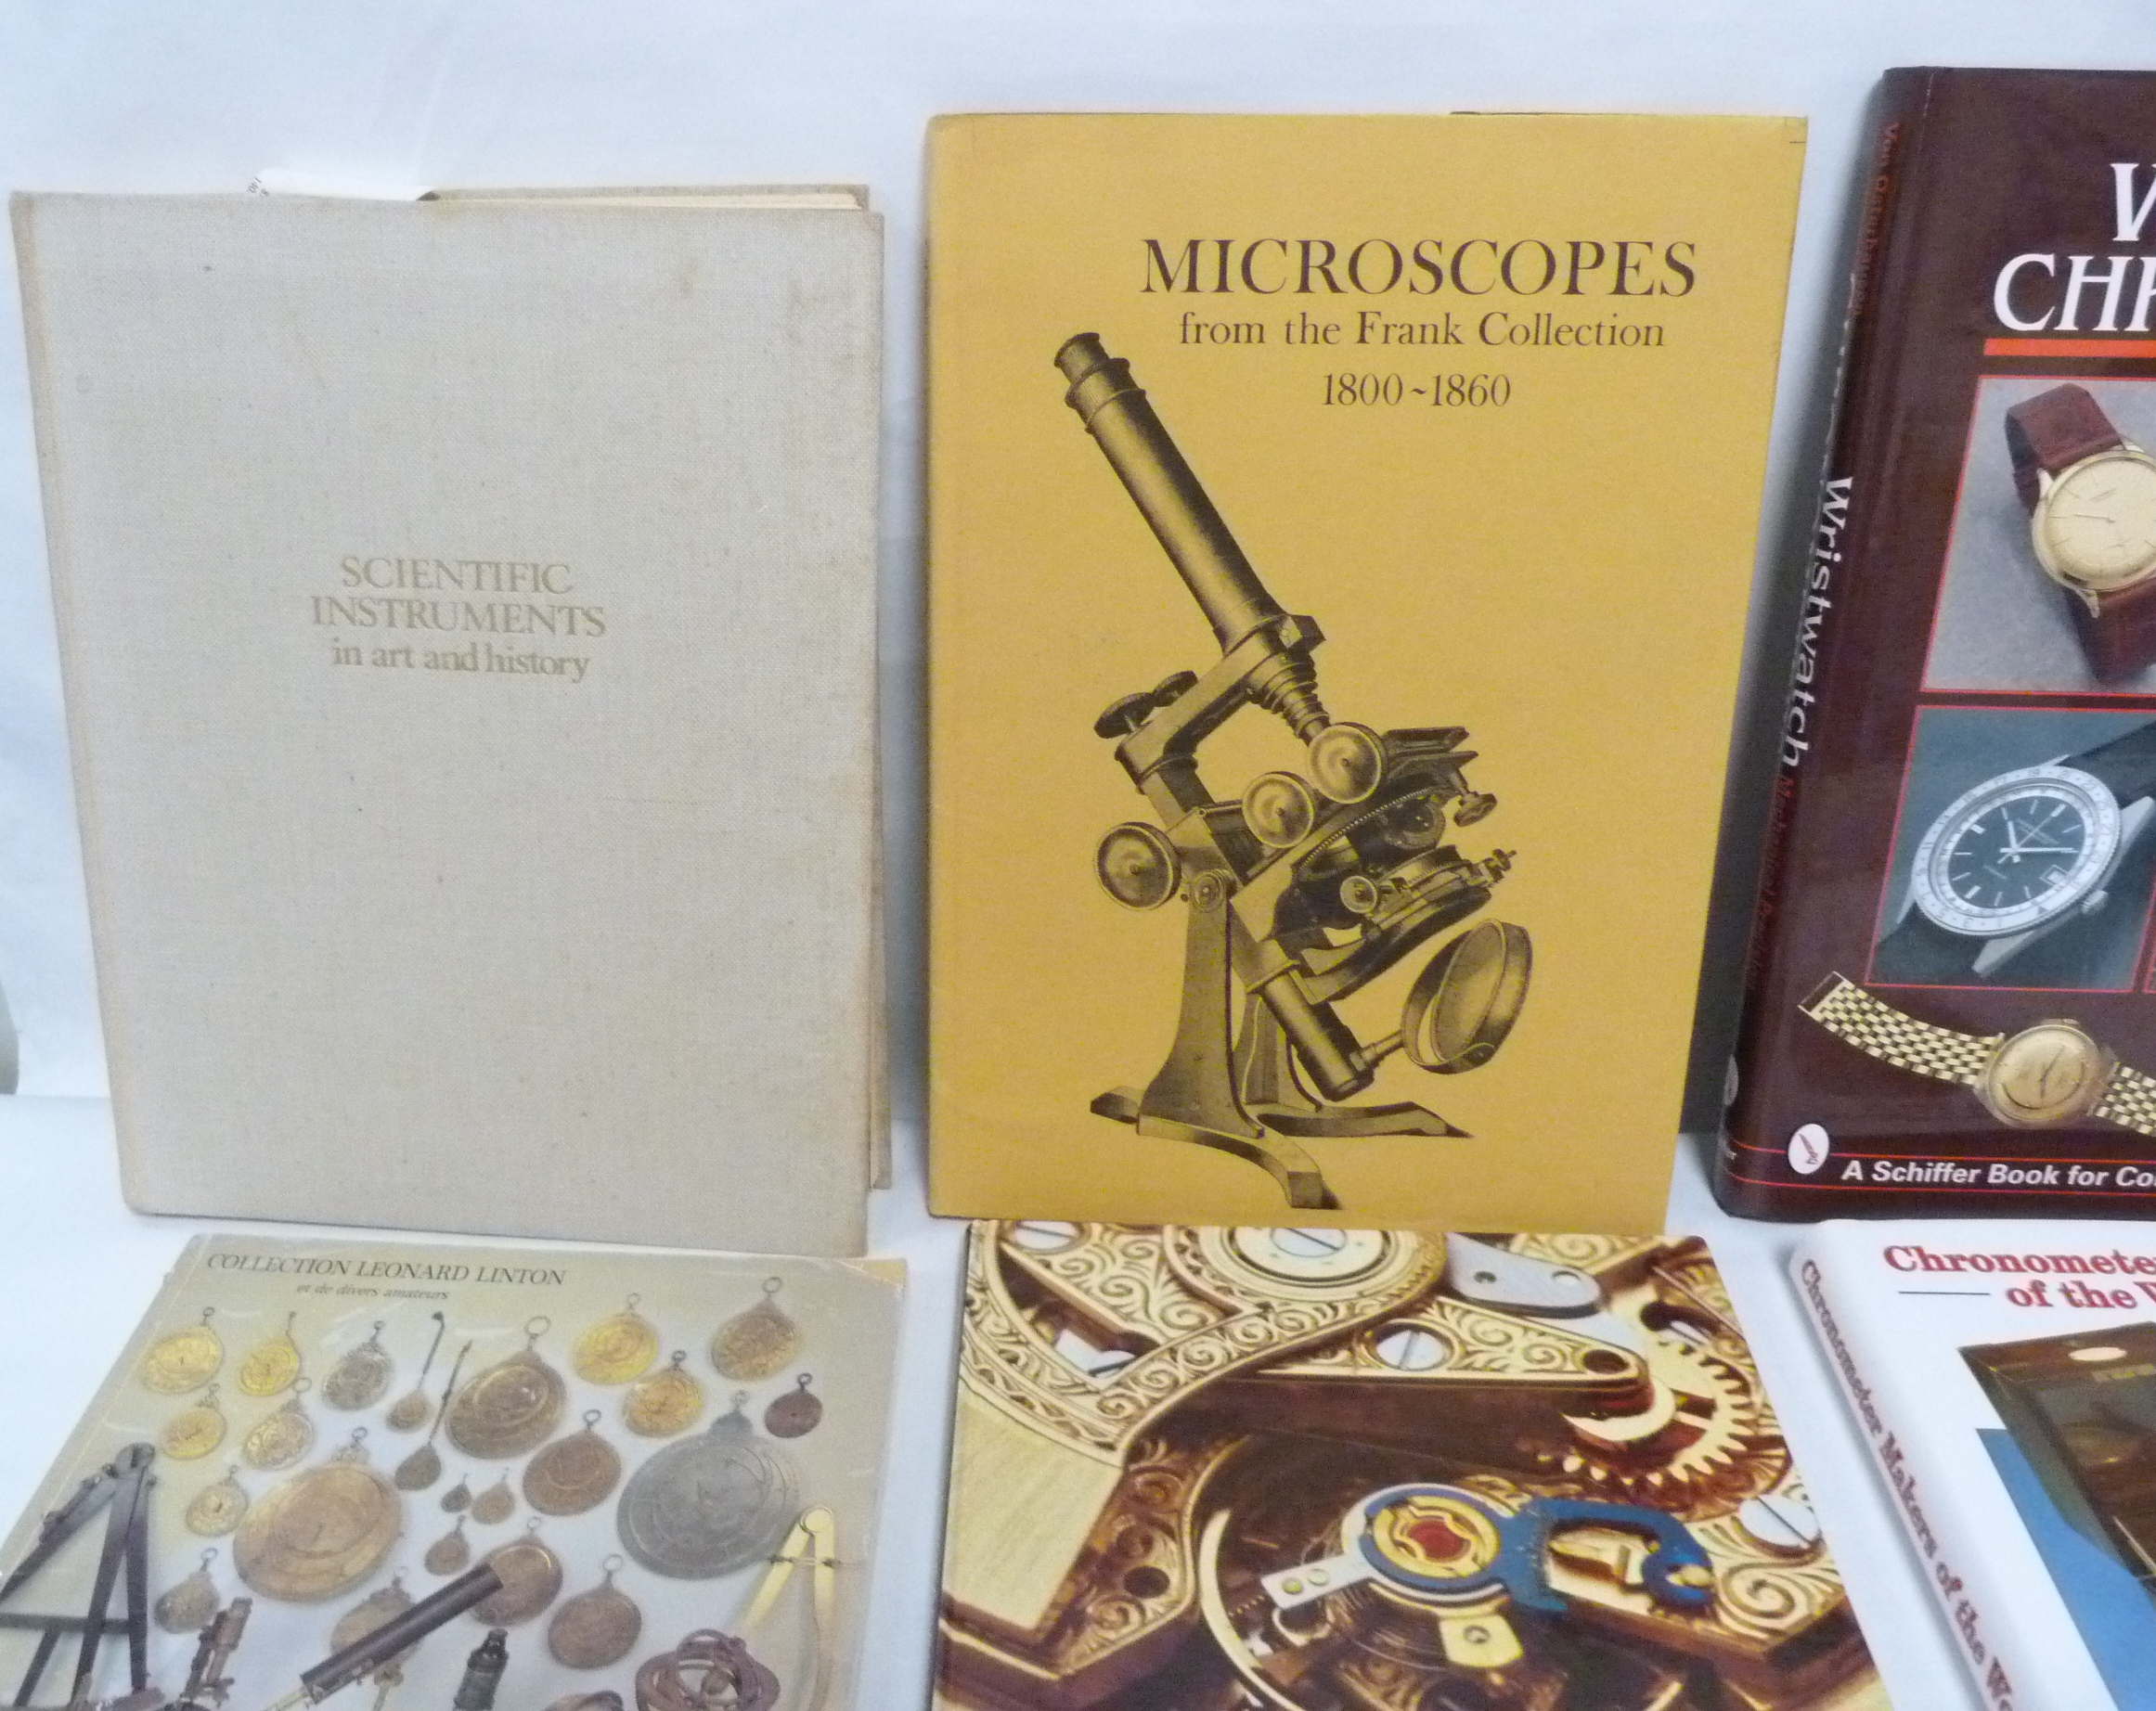 Chronographs, Chronometers, Scientific Instruments, etc. 6 various vols. - Image 3 of 3